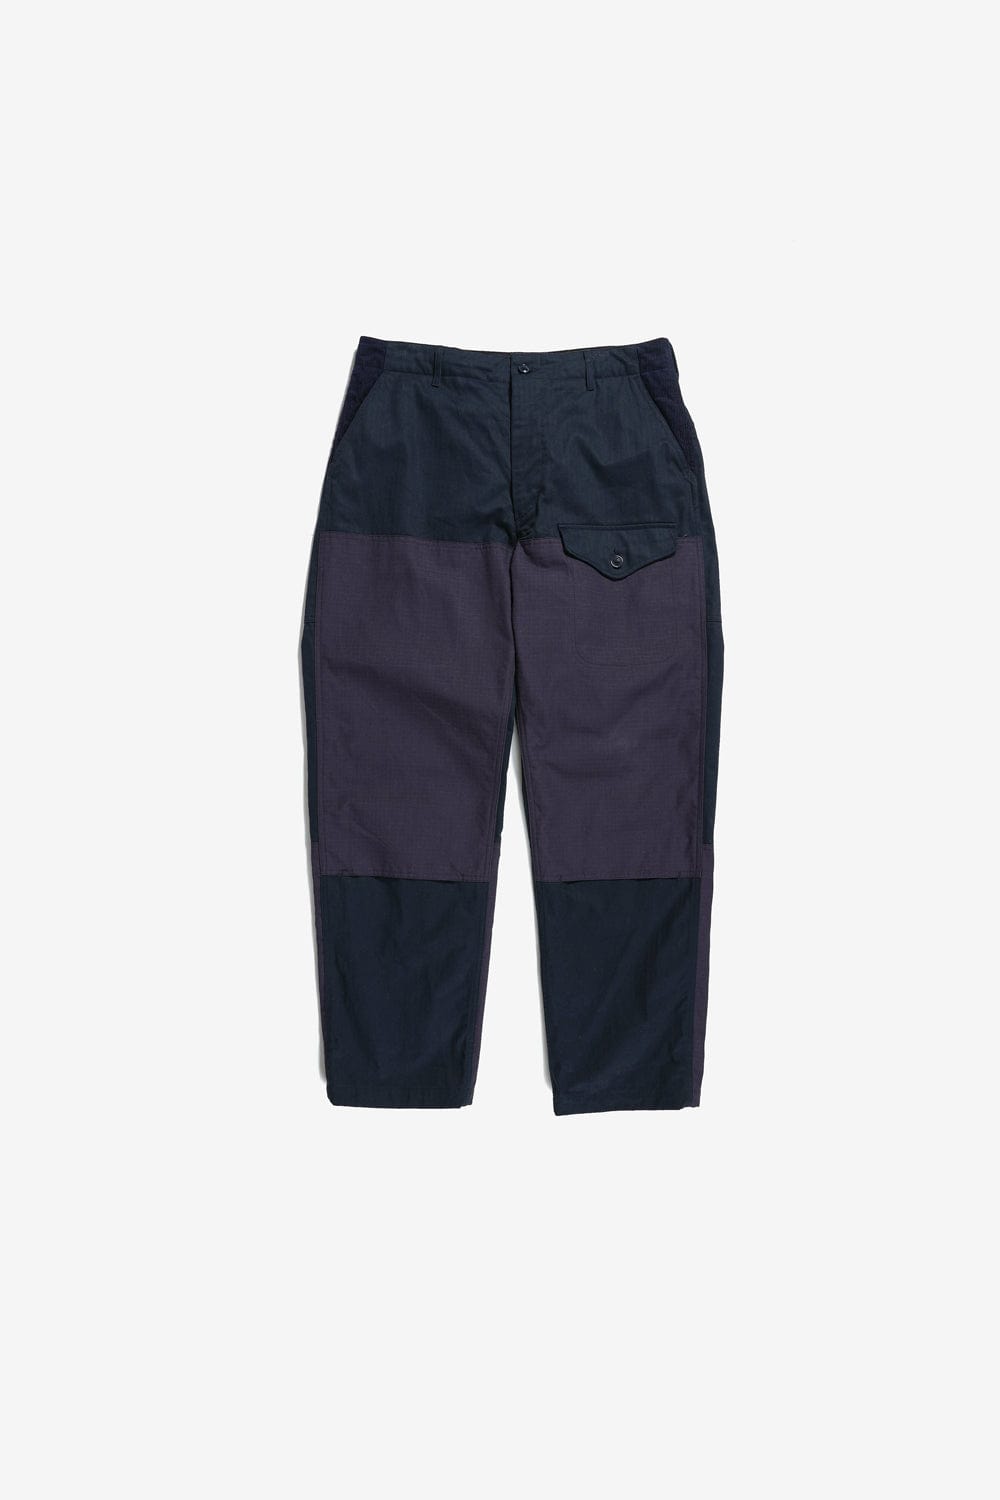 Engineered Garments Field Pant (Dark Navy Cotton Herringbone Twill)